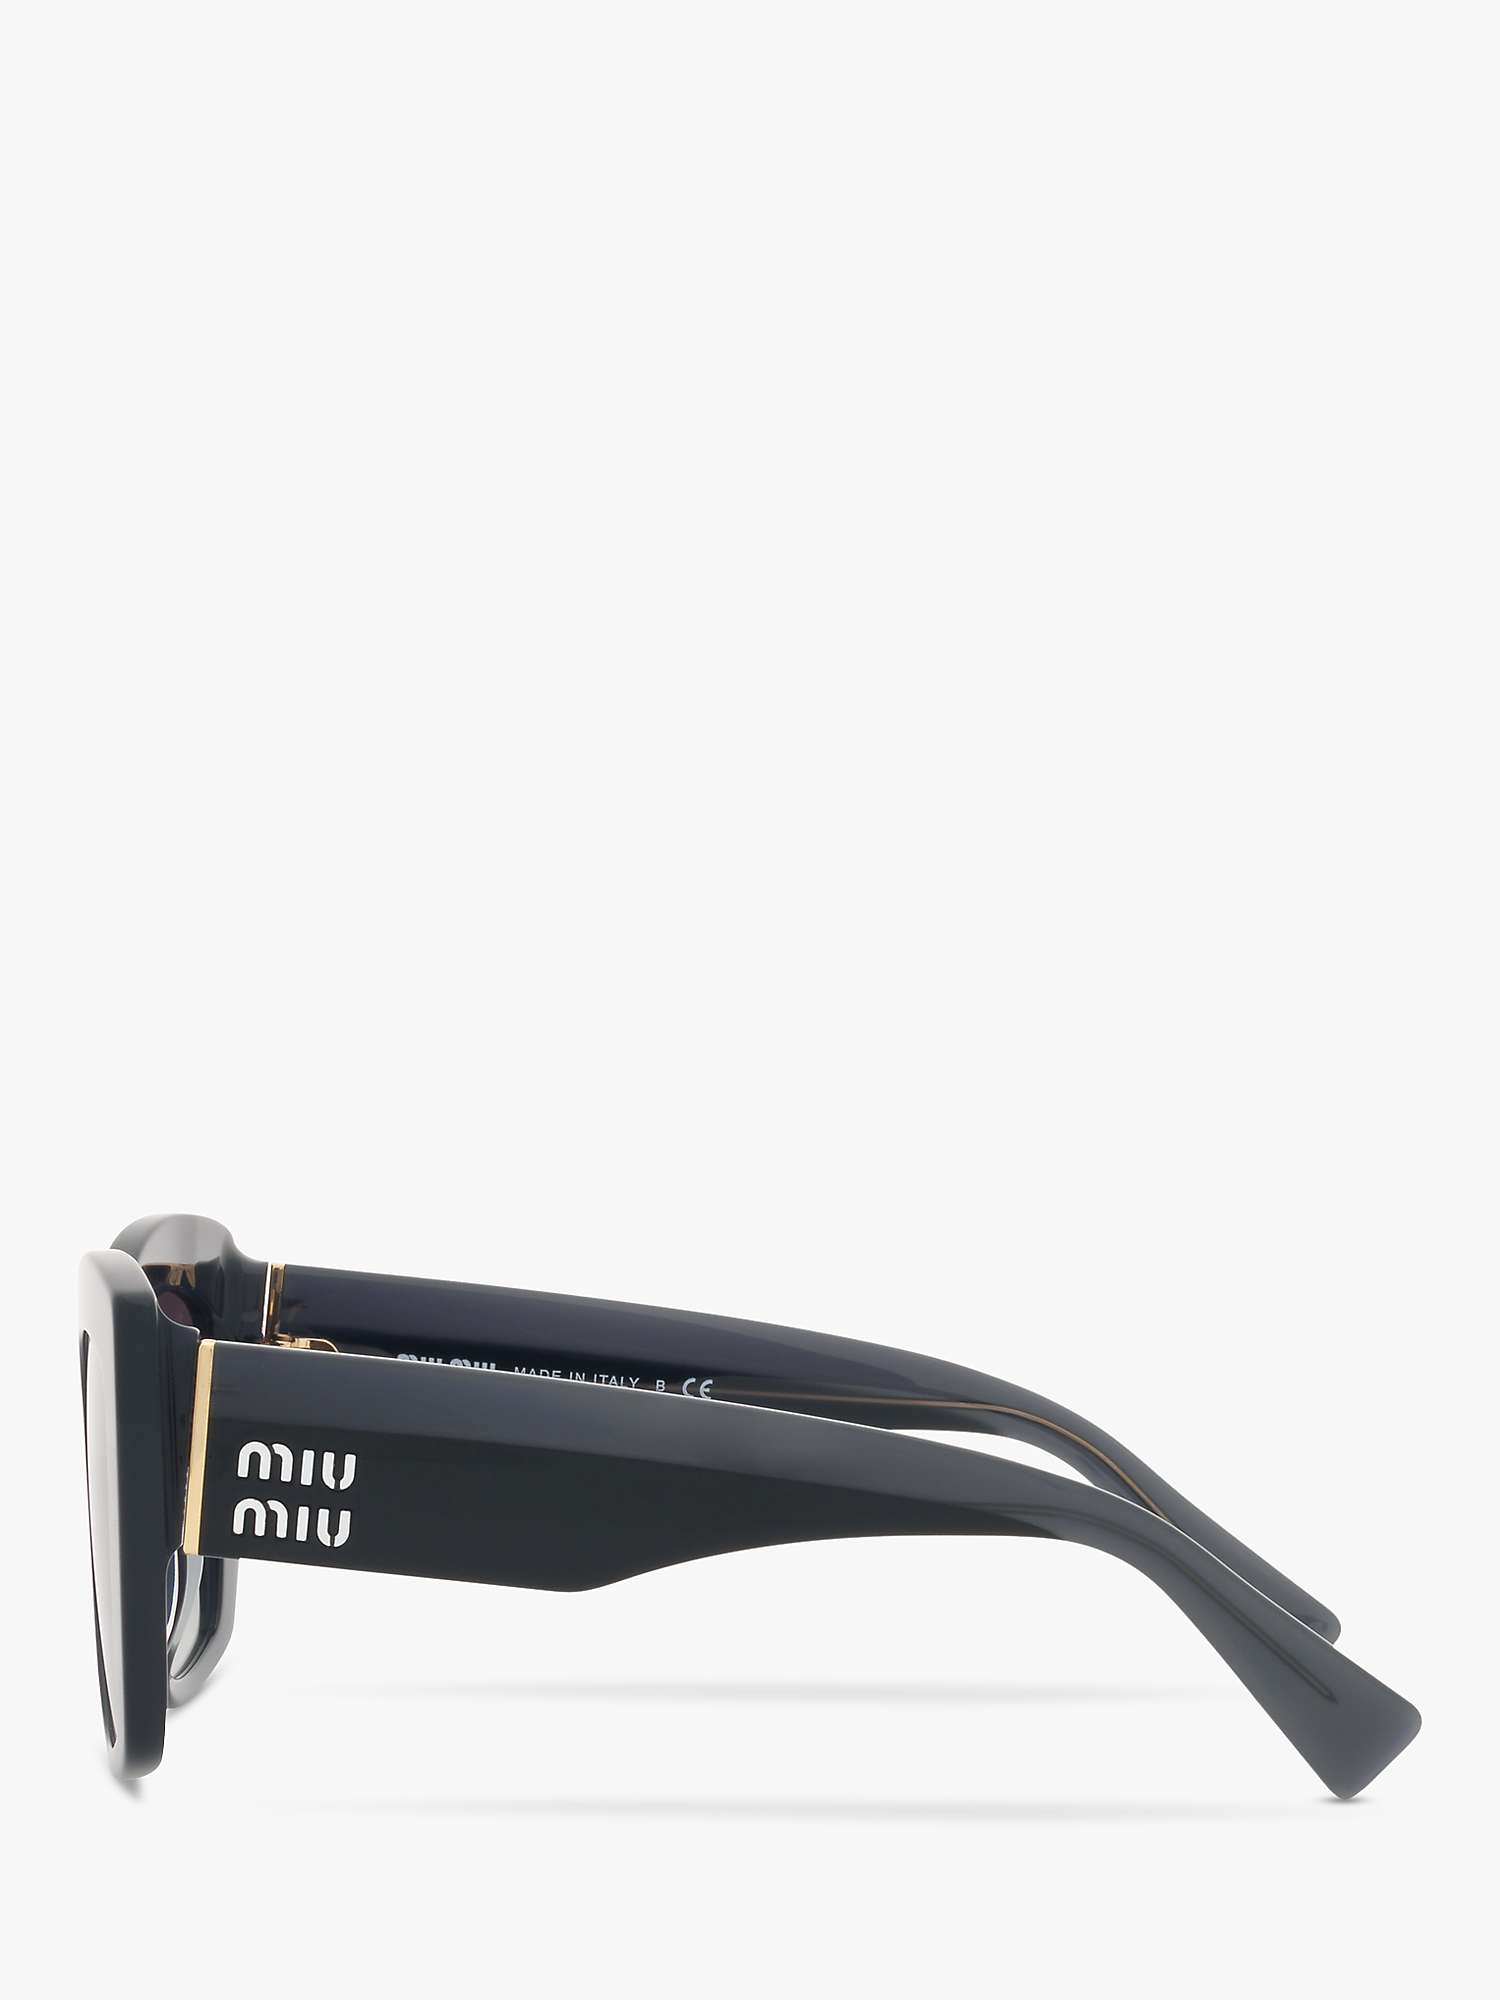 Buy Miu Miu MU 04WS Women's Square Sunglasses, Shiny Grey/Blue Gradient Online at johnlewis.com